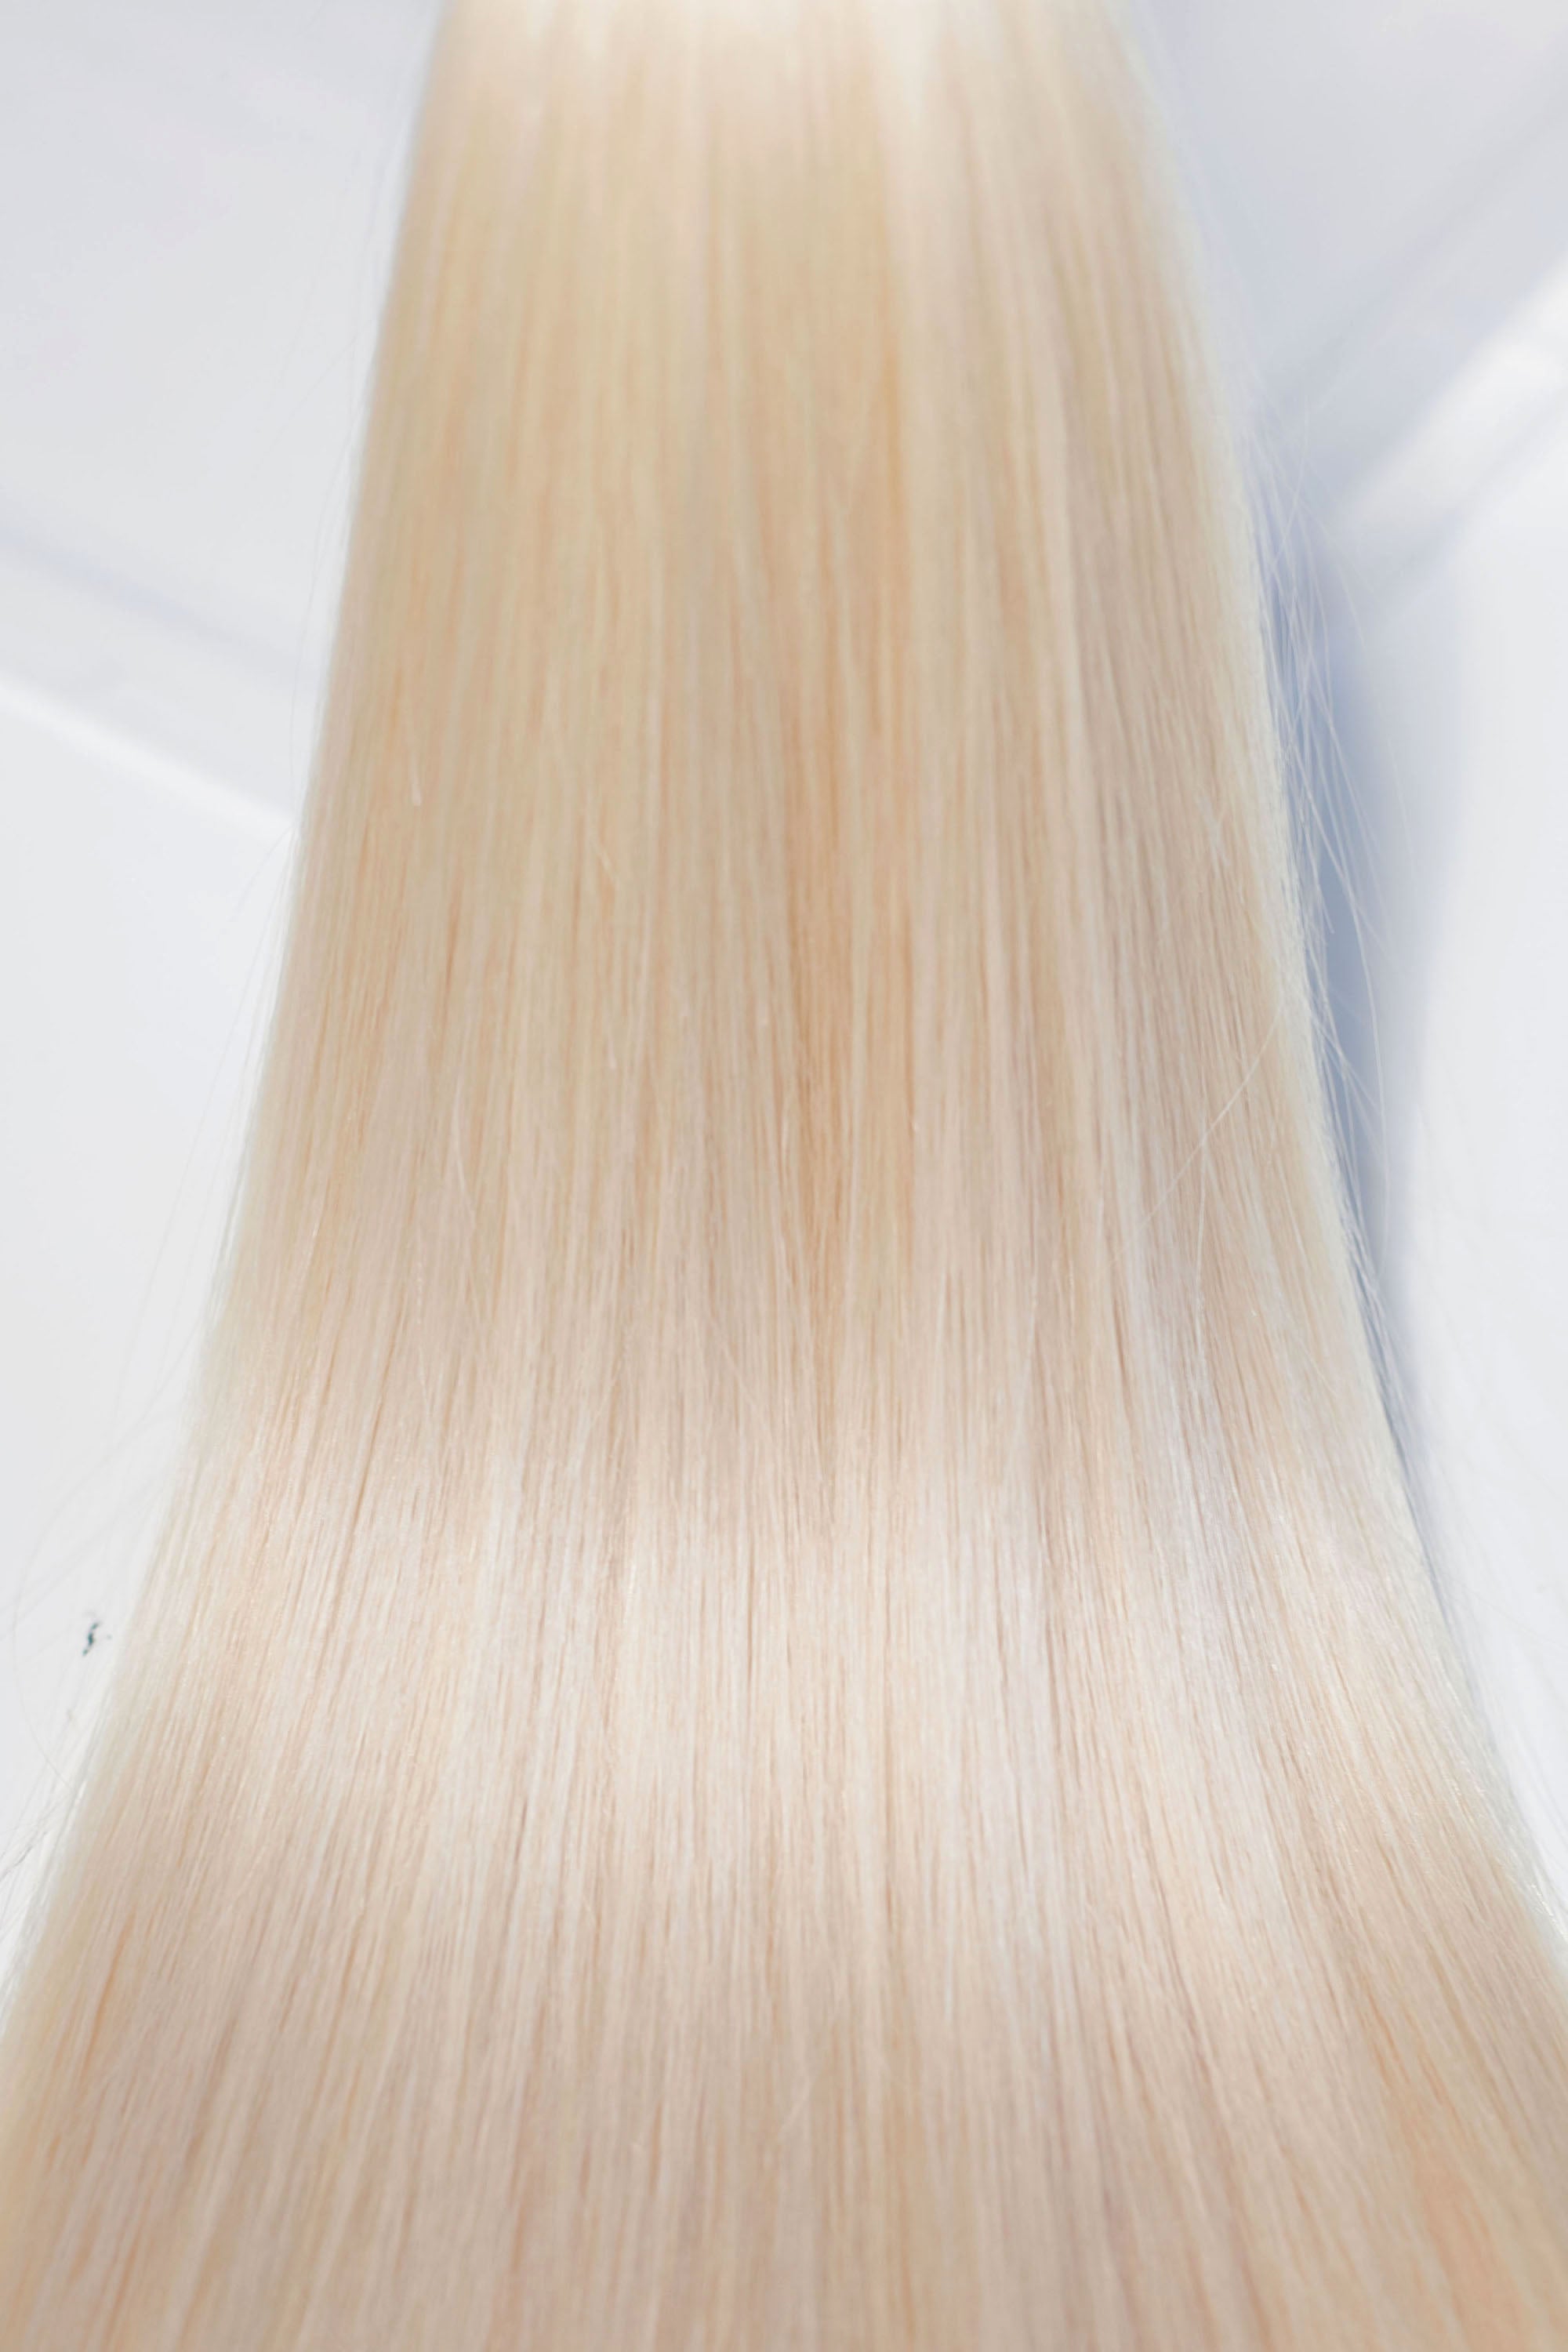 Behair professional Keratin Tip "Premium" 16" (40cm) Natural Straight Ice Blond #000 - 25g (Micro - 0.5g each pcs) hair extensions